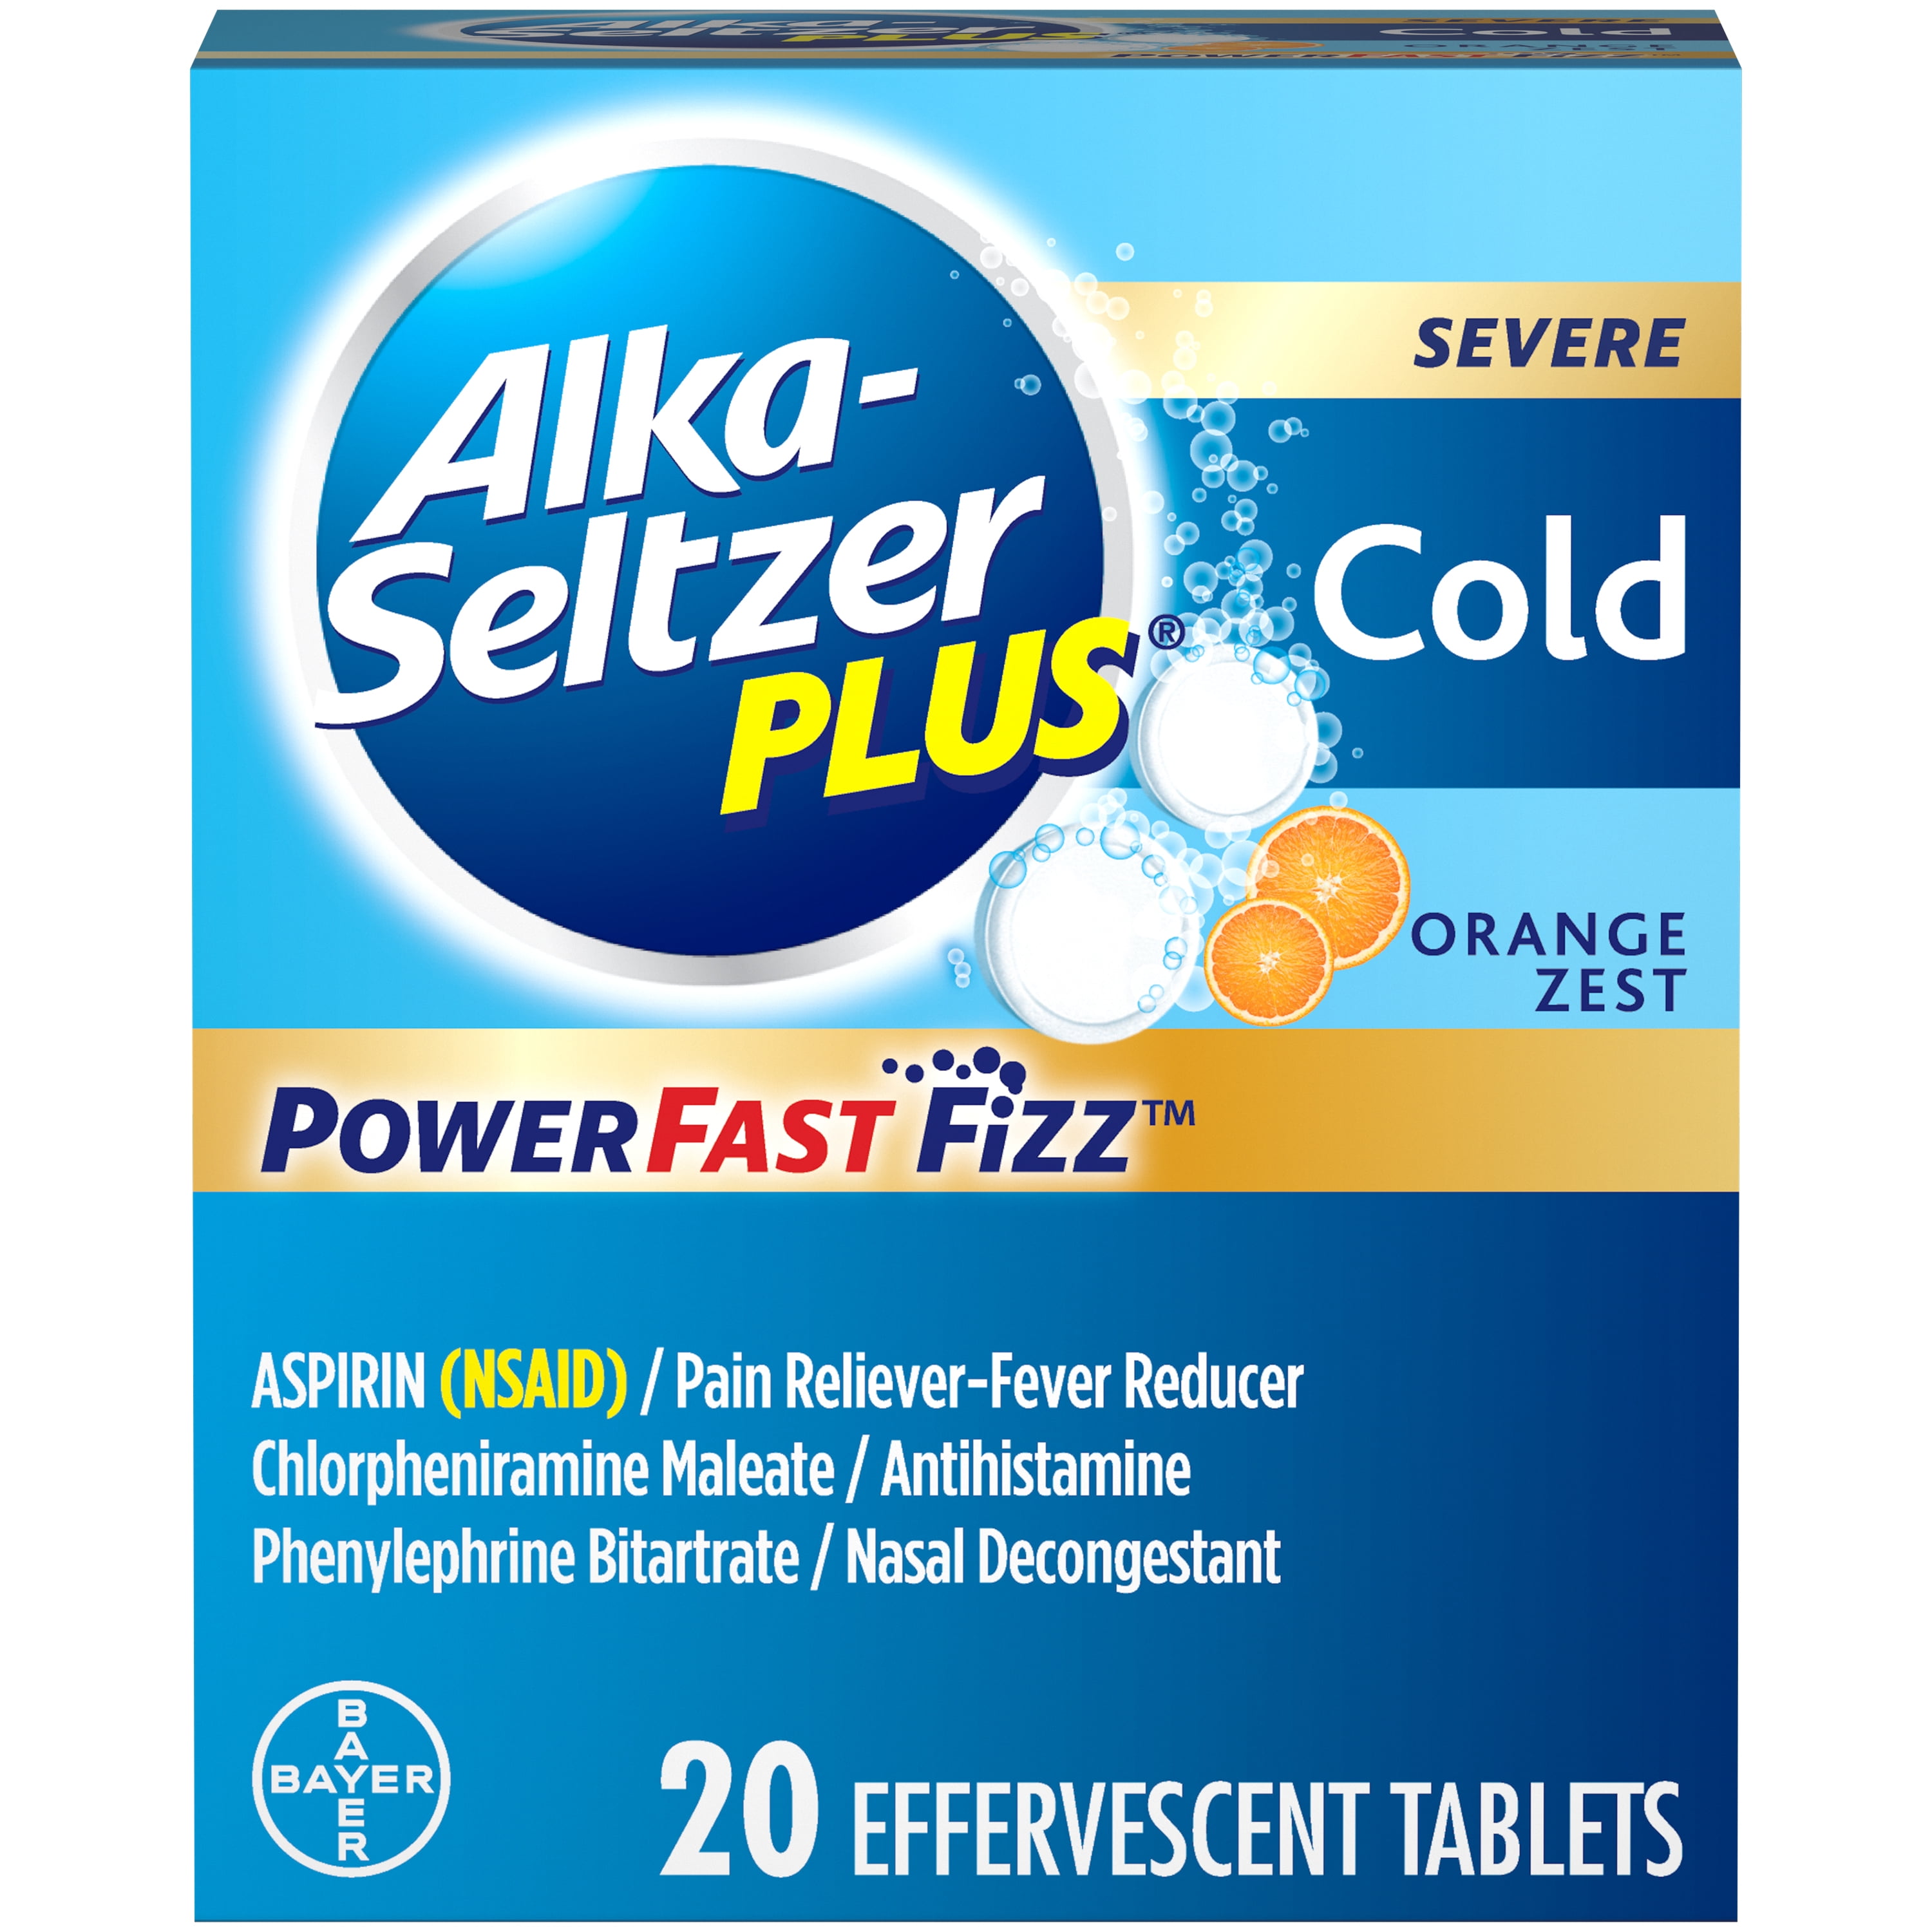 buy-alka-seltzer-plus-severe-cold-powerfast-fizz-orange-zest